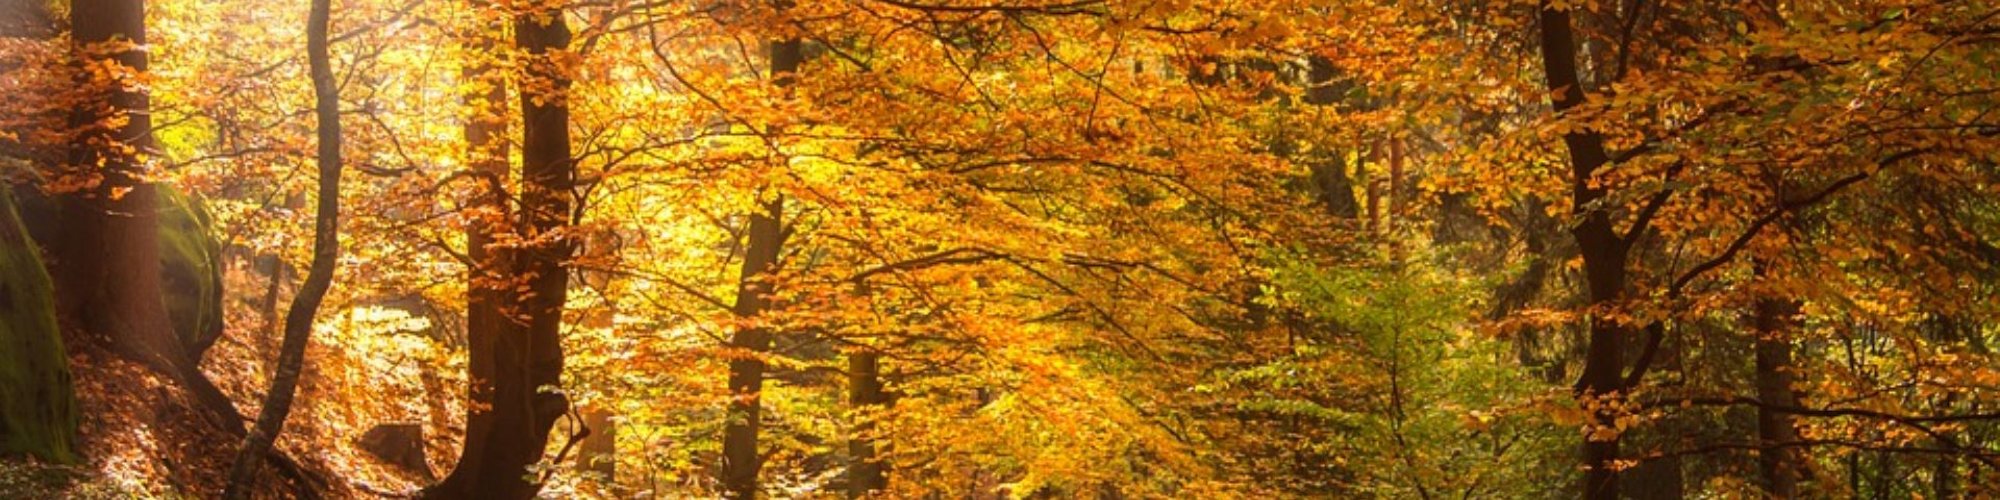 Autumnal forest on Monte Amiata